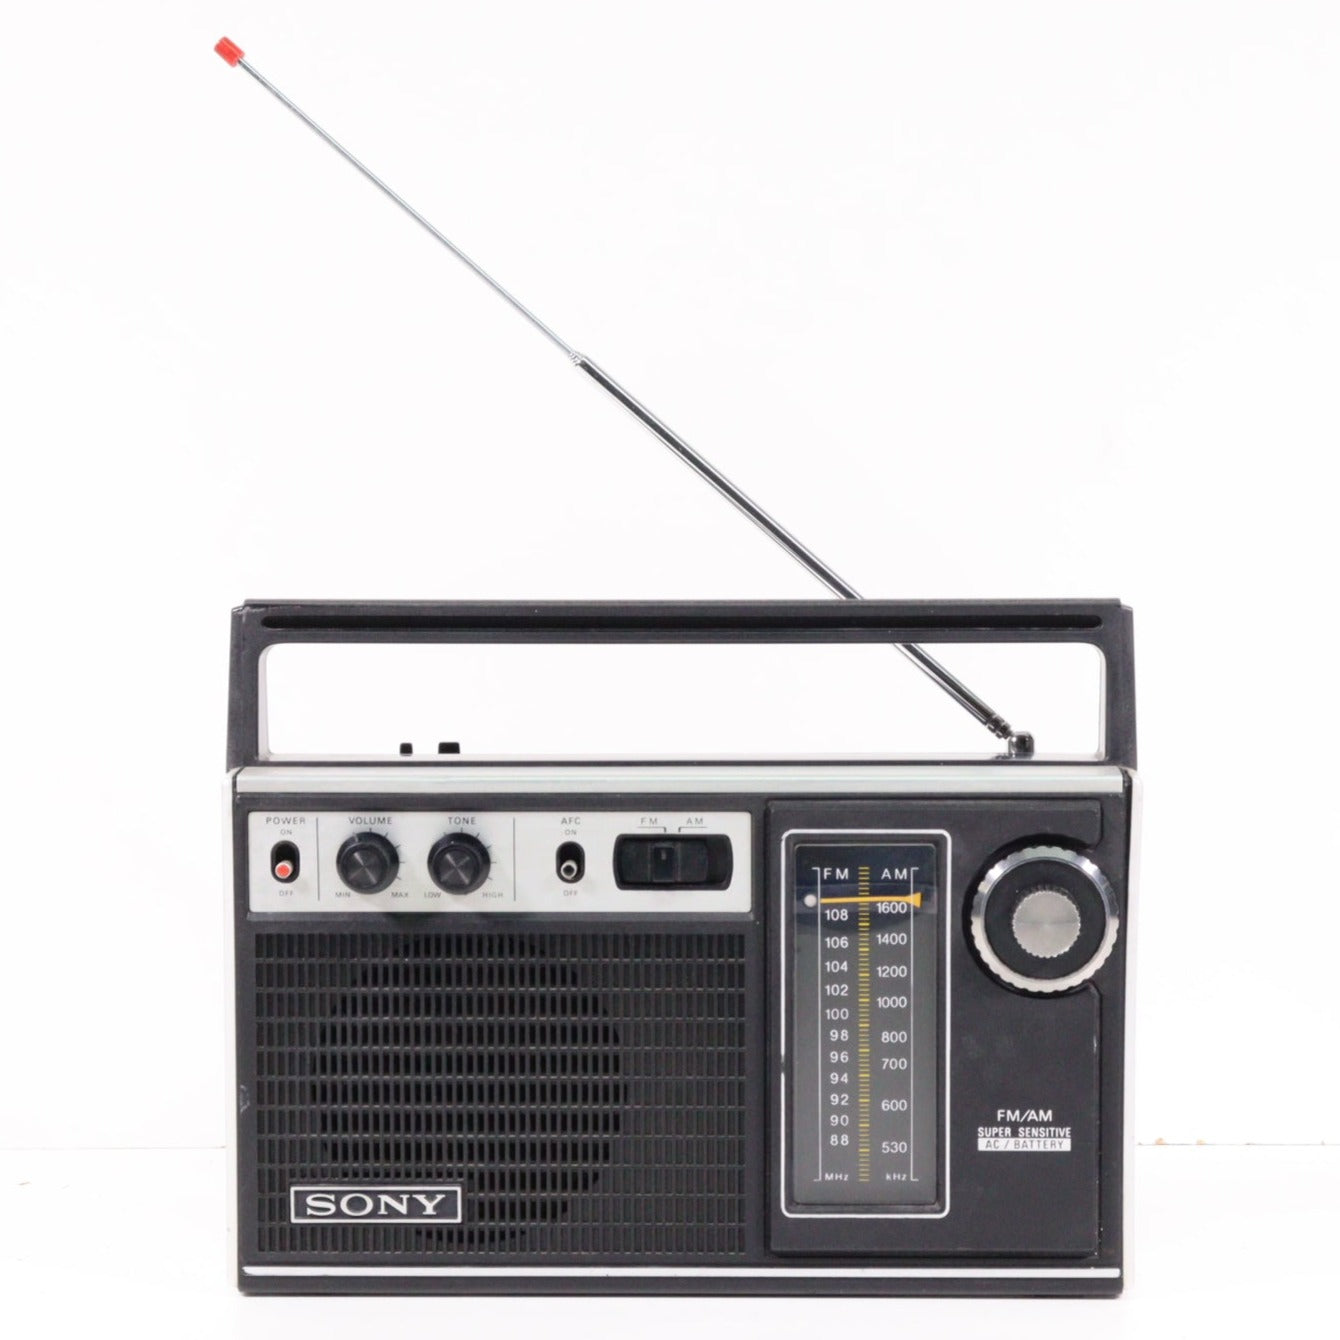 Radio portatile Sony FM/AM 2 bande vintage, modello Sony TFM-6060W